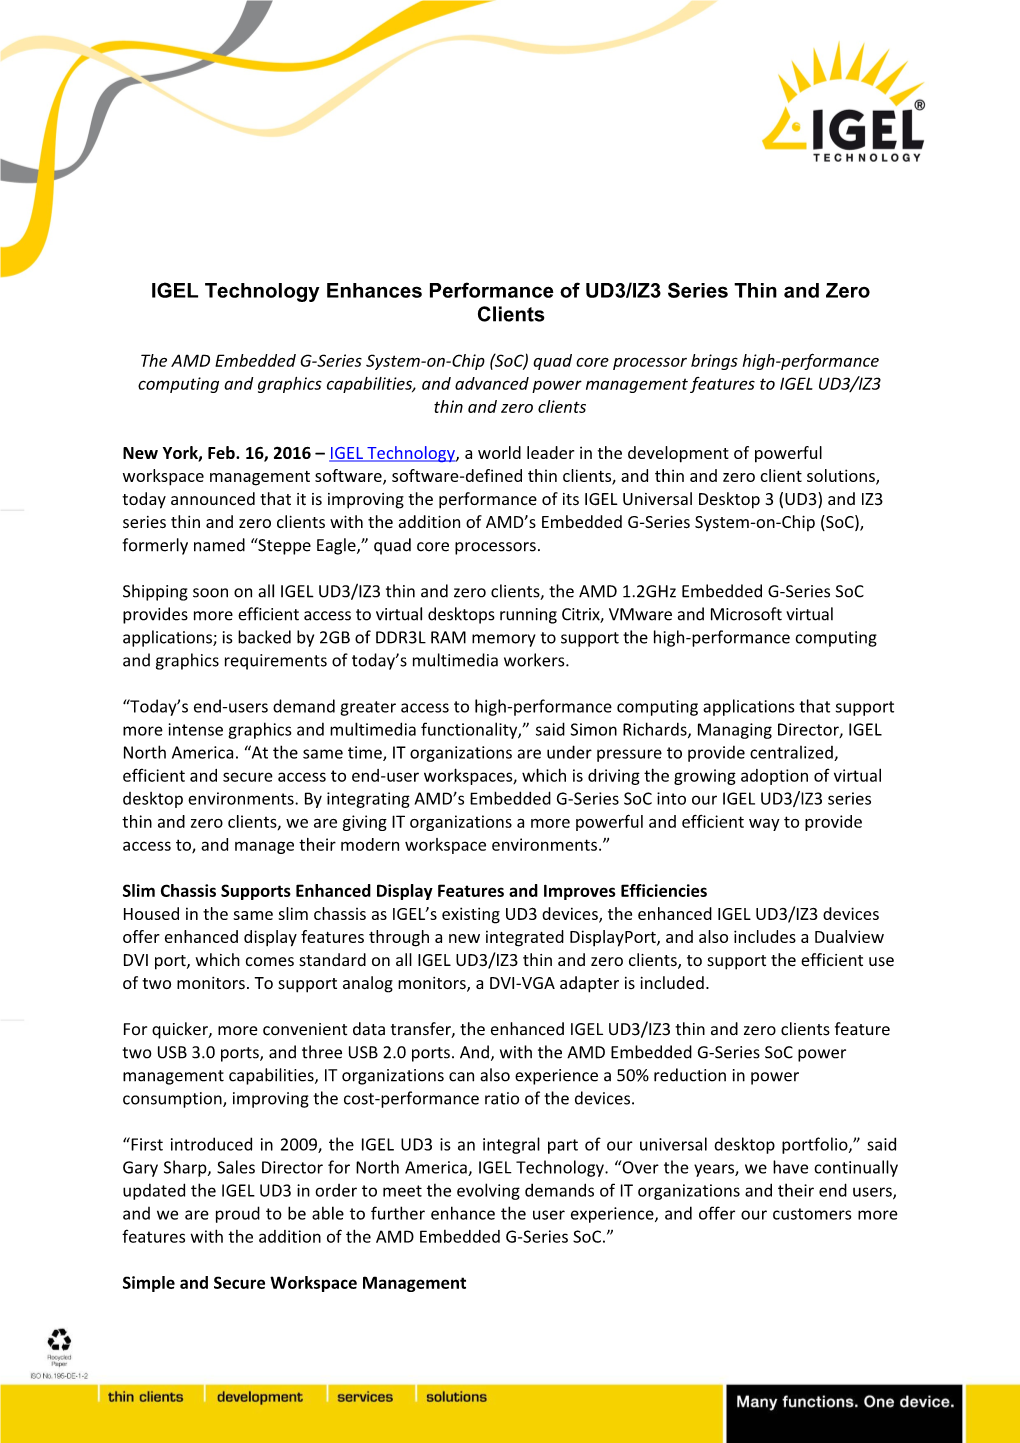 IGEL Technology Enhances Performance of UD3/IZ3 Series Thin and Zero Clients